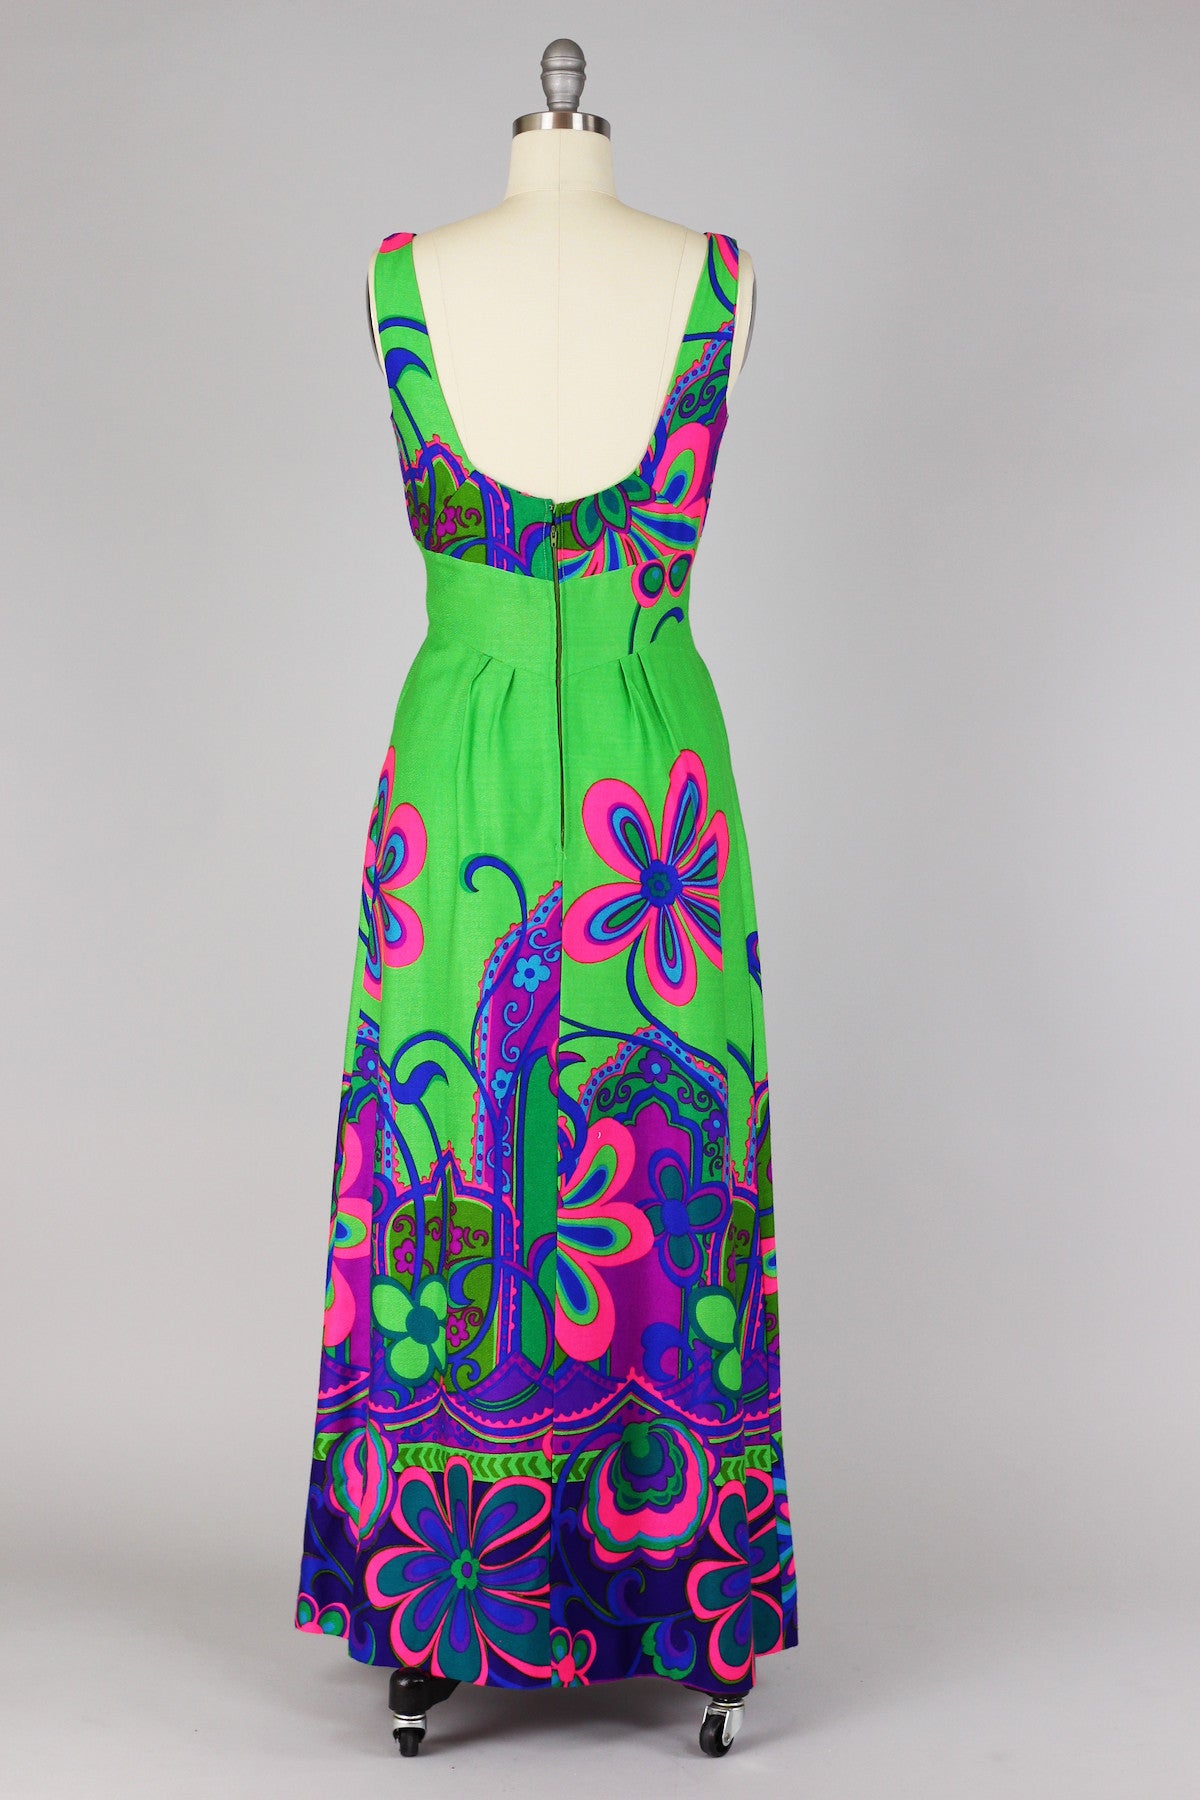 RARE 1960s Psychedelic Print Summer Beach Hawaiian Dress